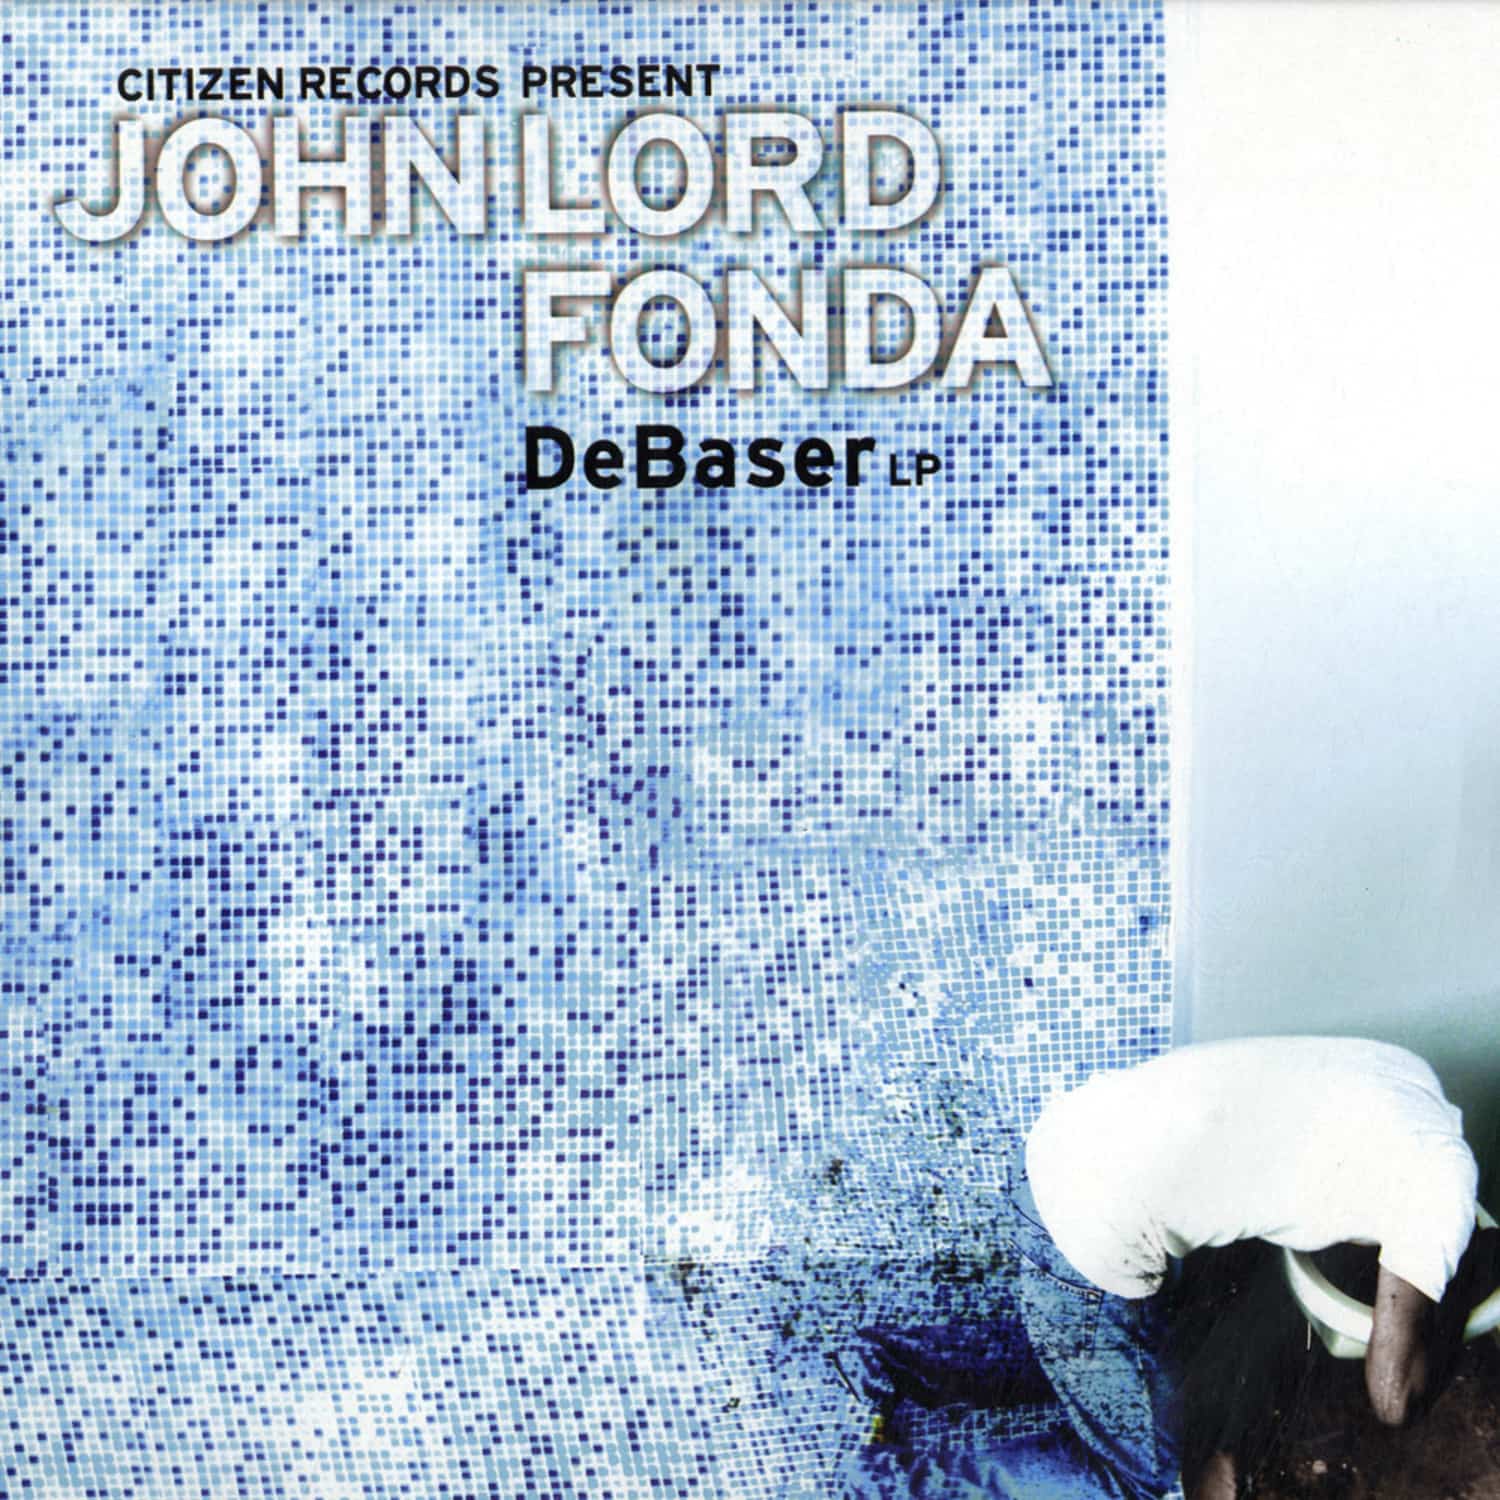 John Lord Fonda - DEBASER EP